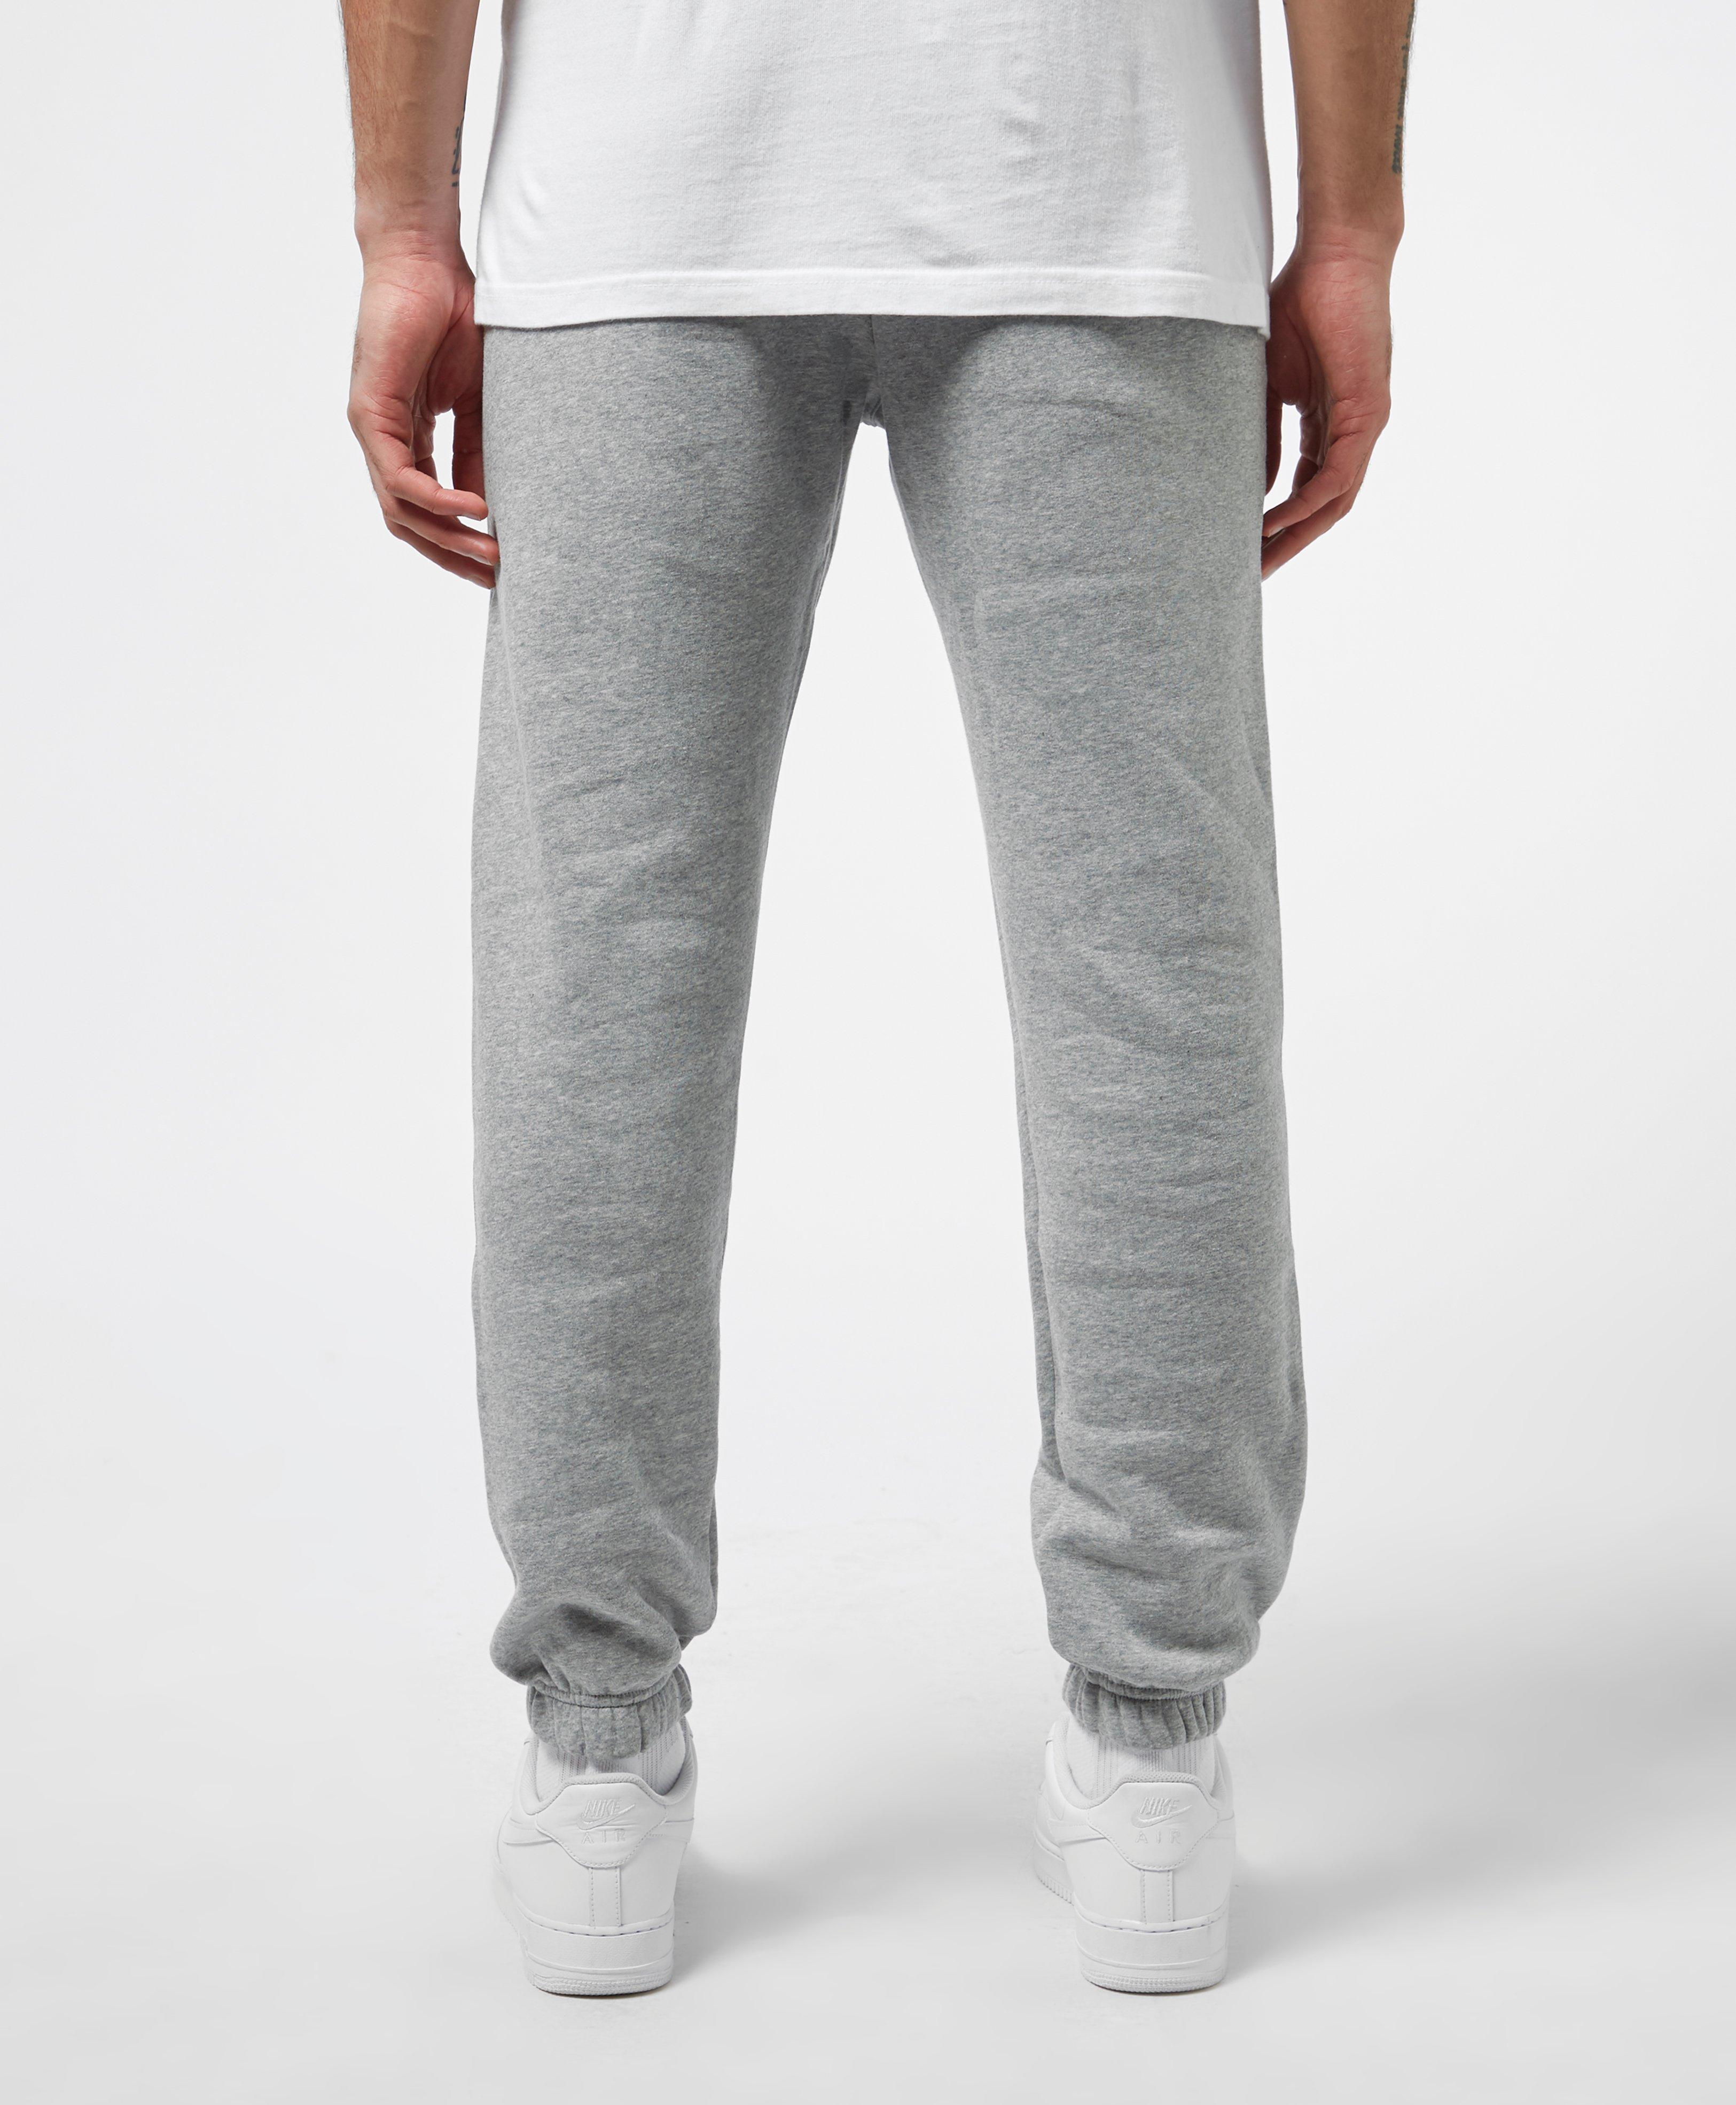 Nike Club Cuffed Fleece Track Pants in Grey (Gray) for Men - Lyst